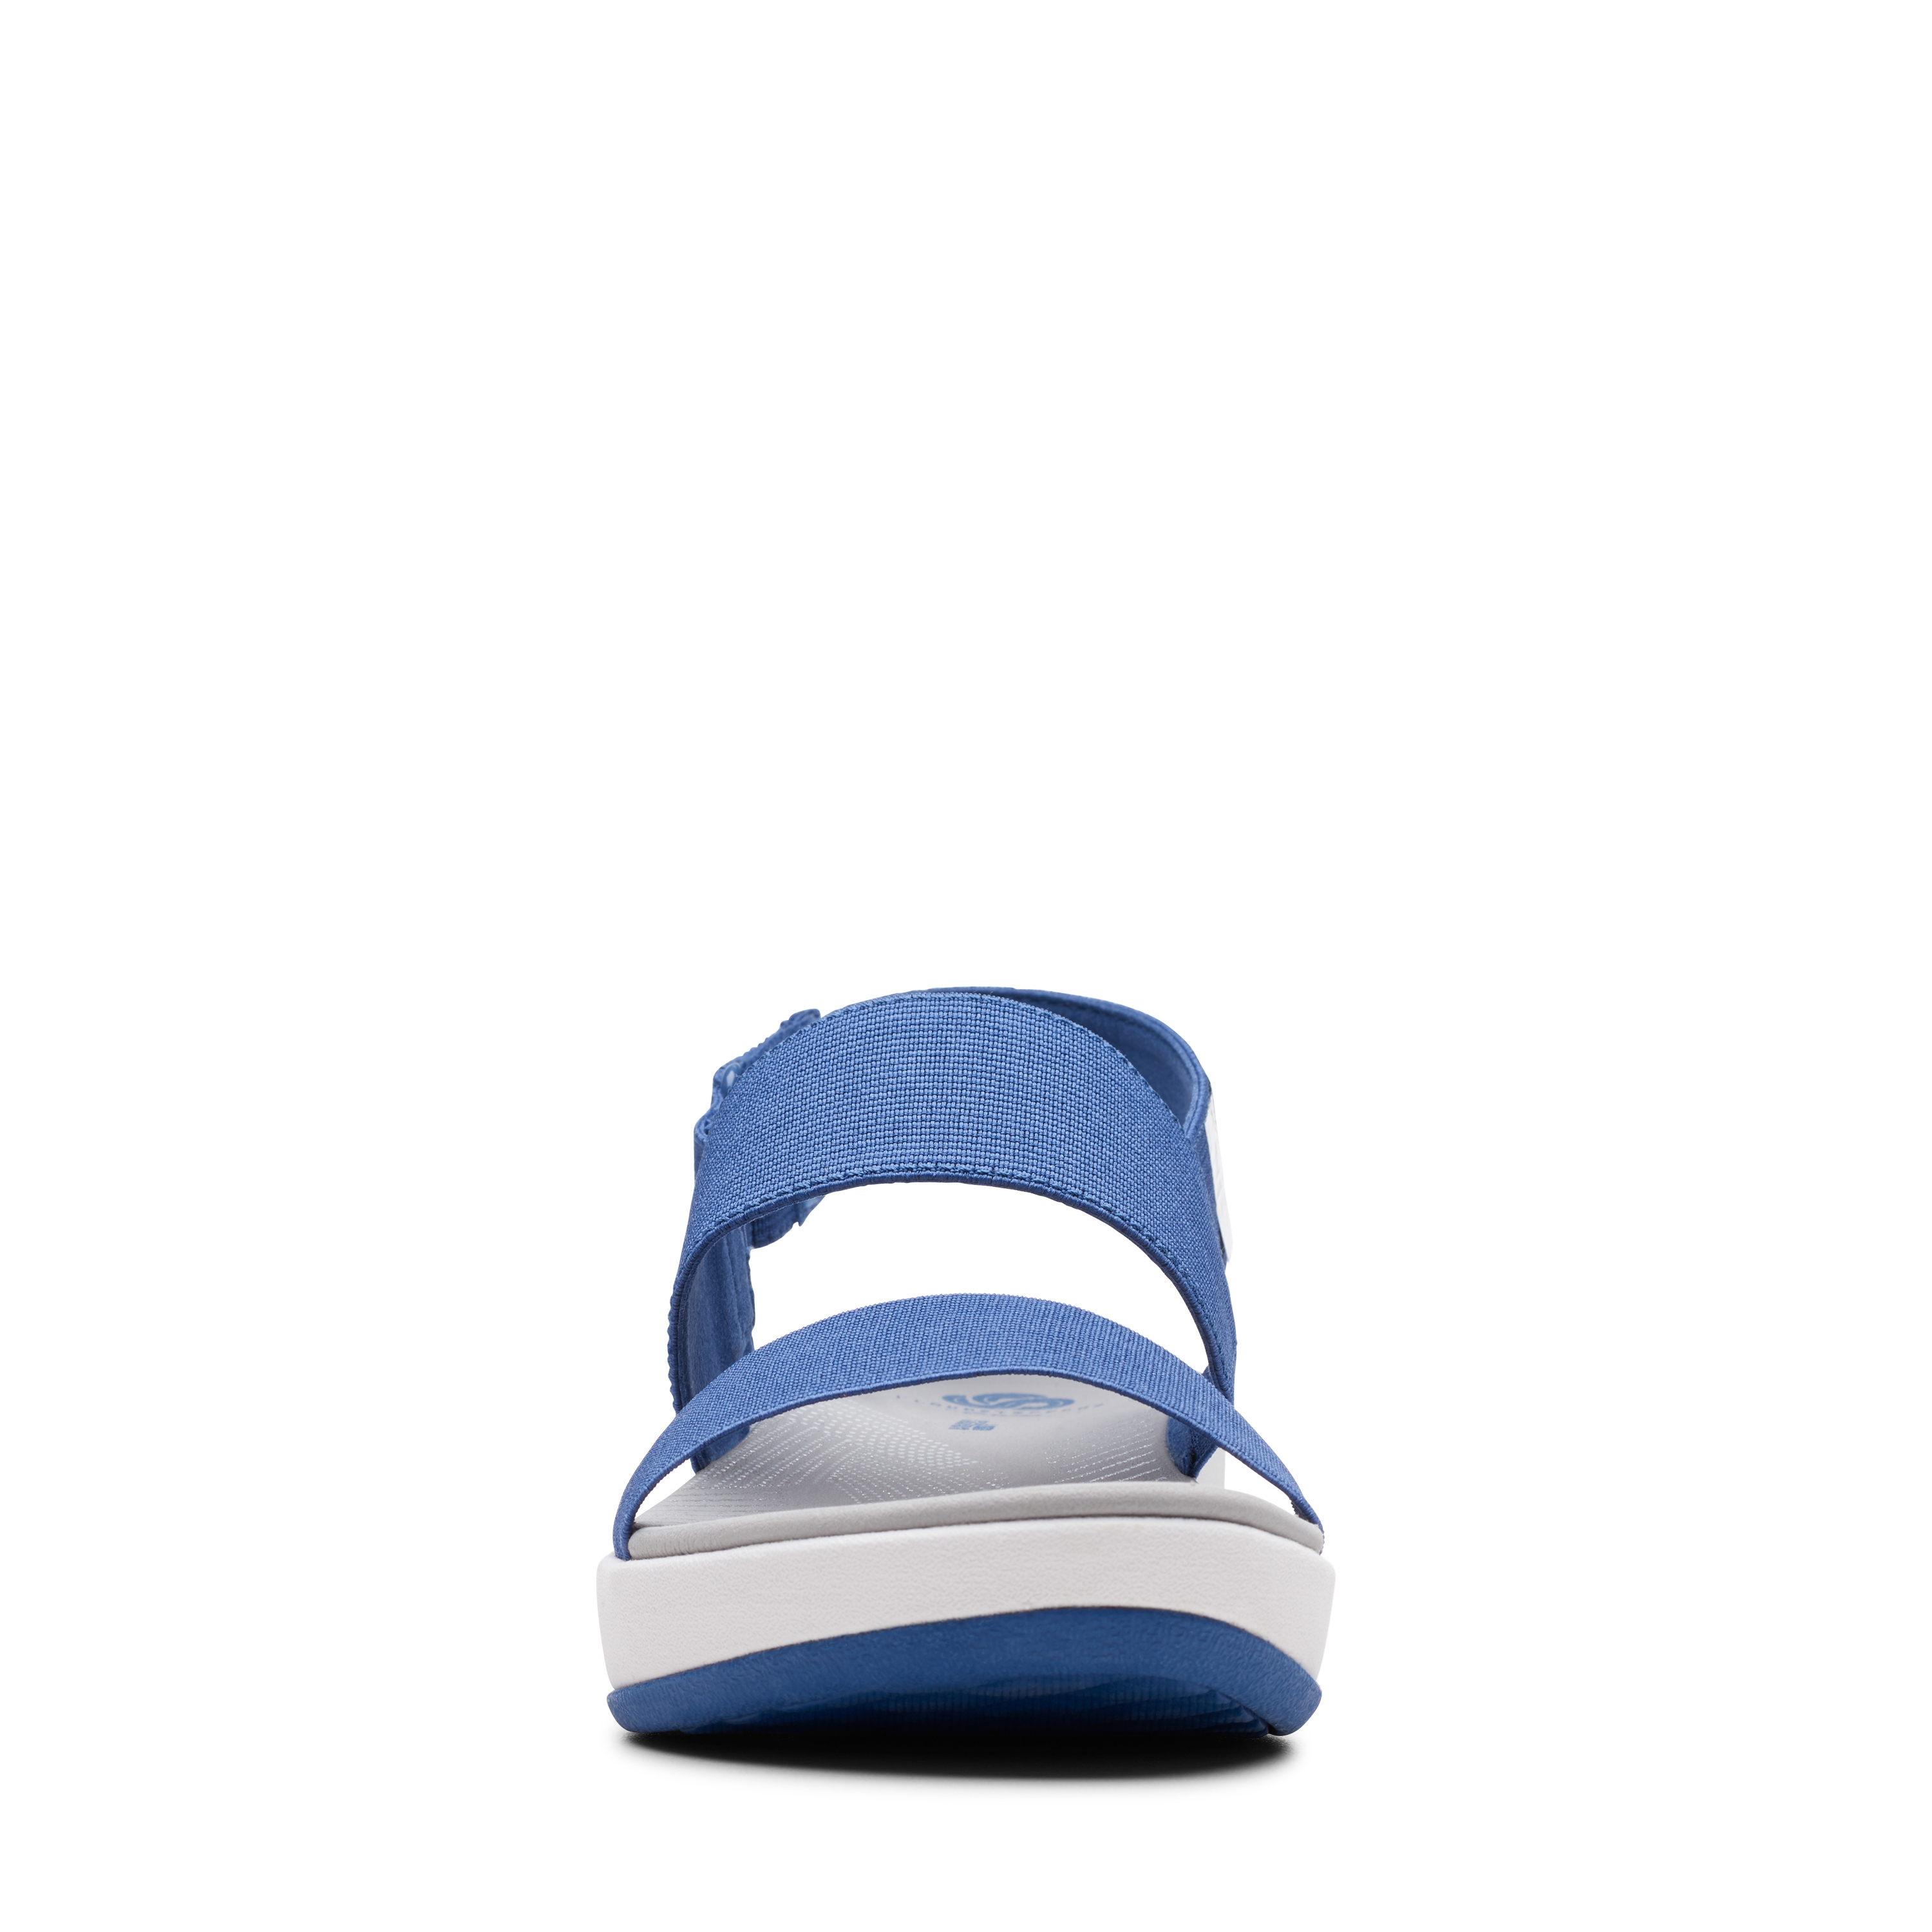 Clarks | Women's Blue Sandals 2